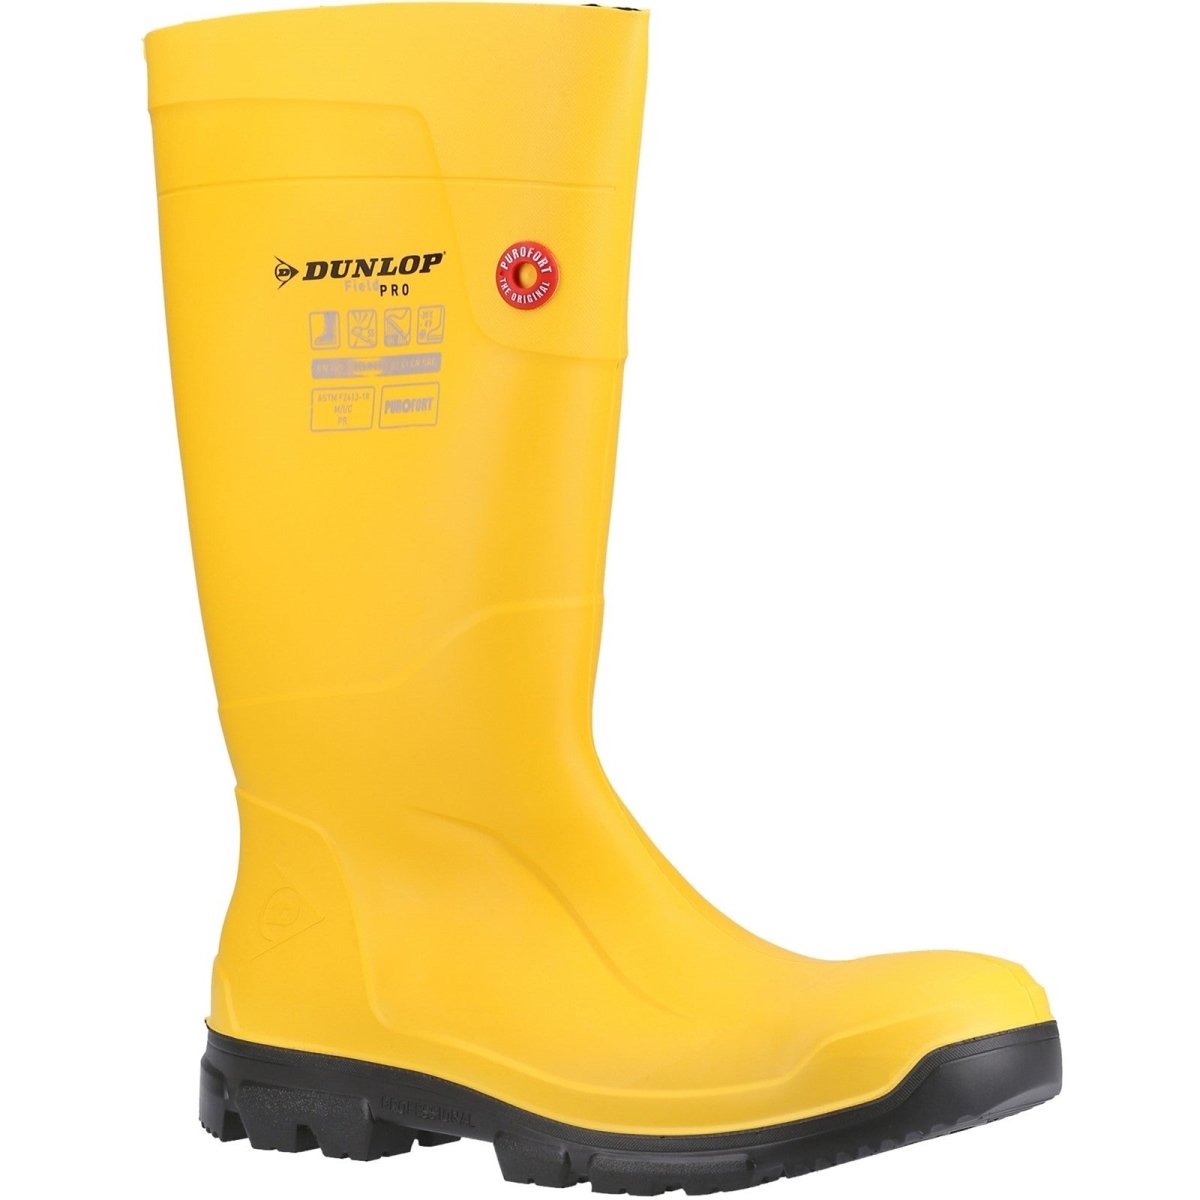 Dunlop Purofort FieldPRO Full Safety Wellington - Shoe Store Direct